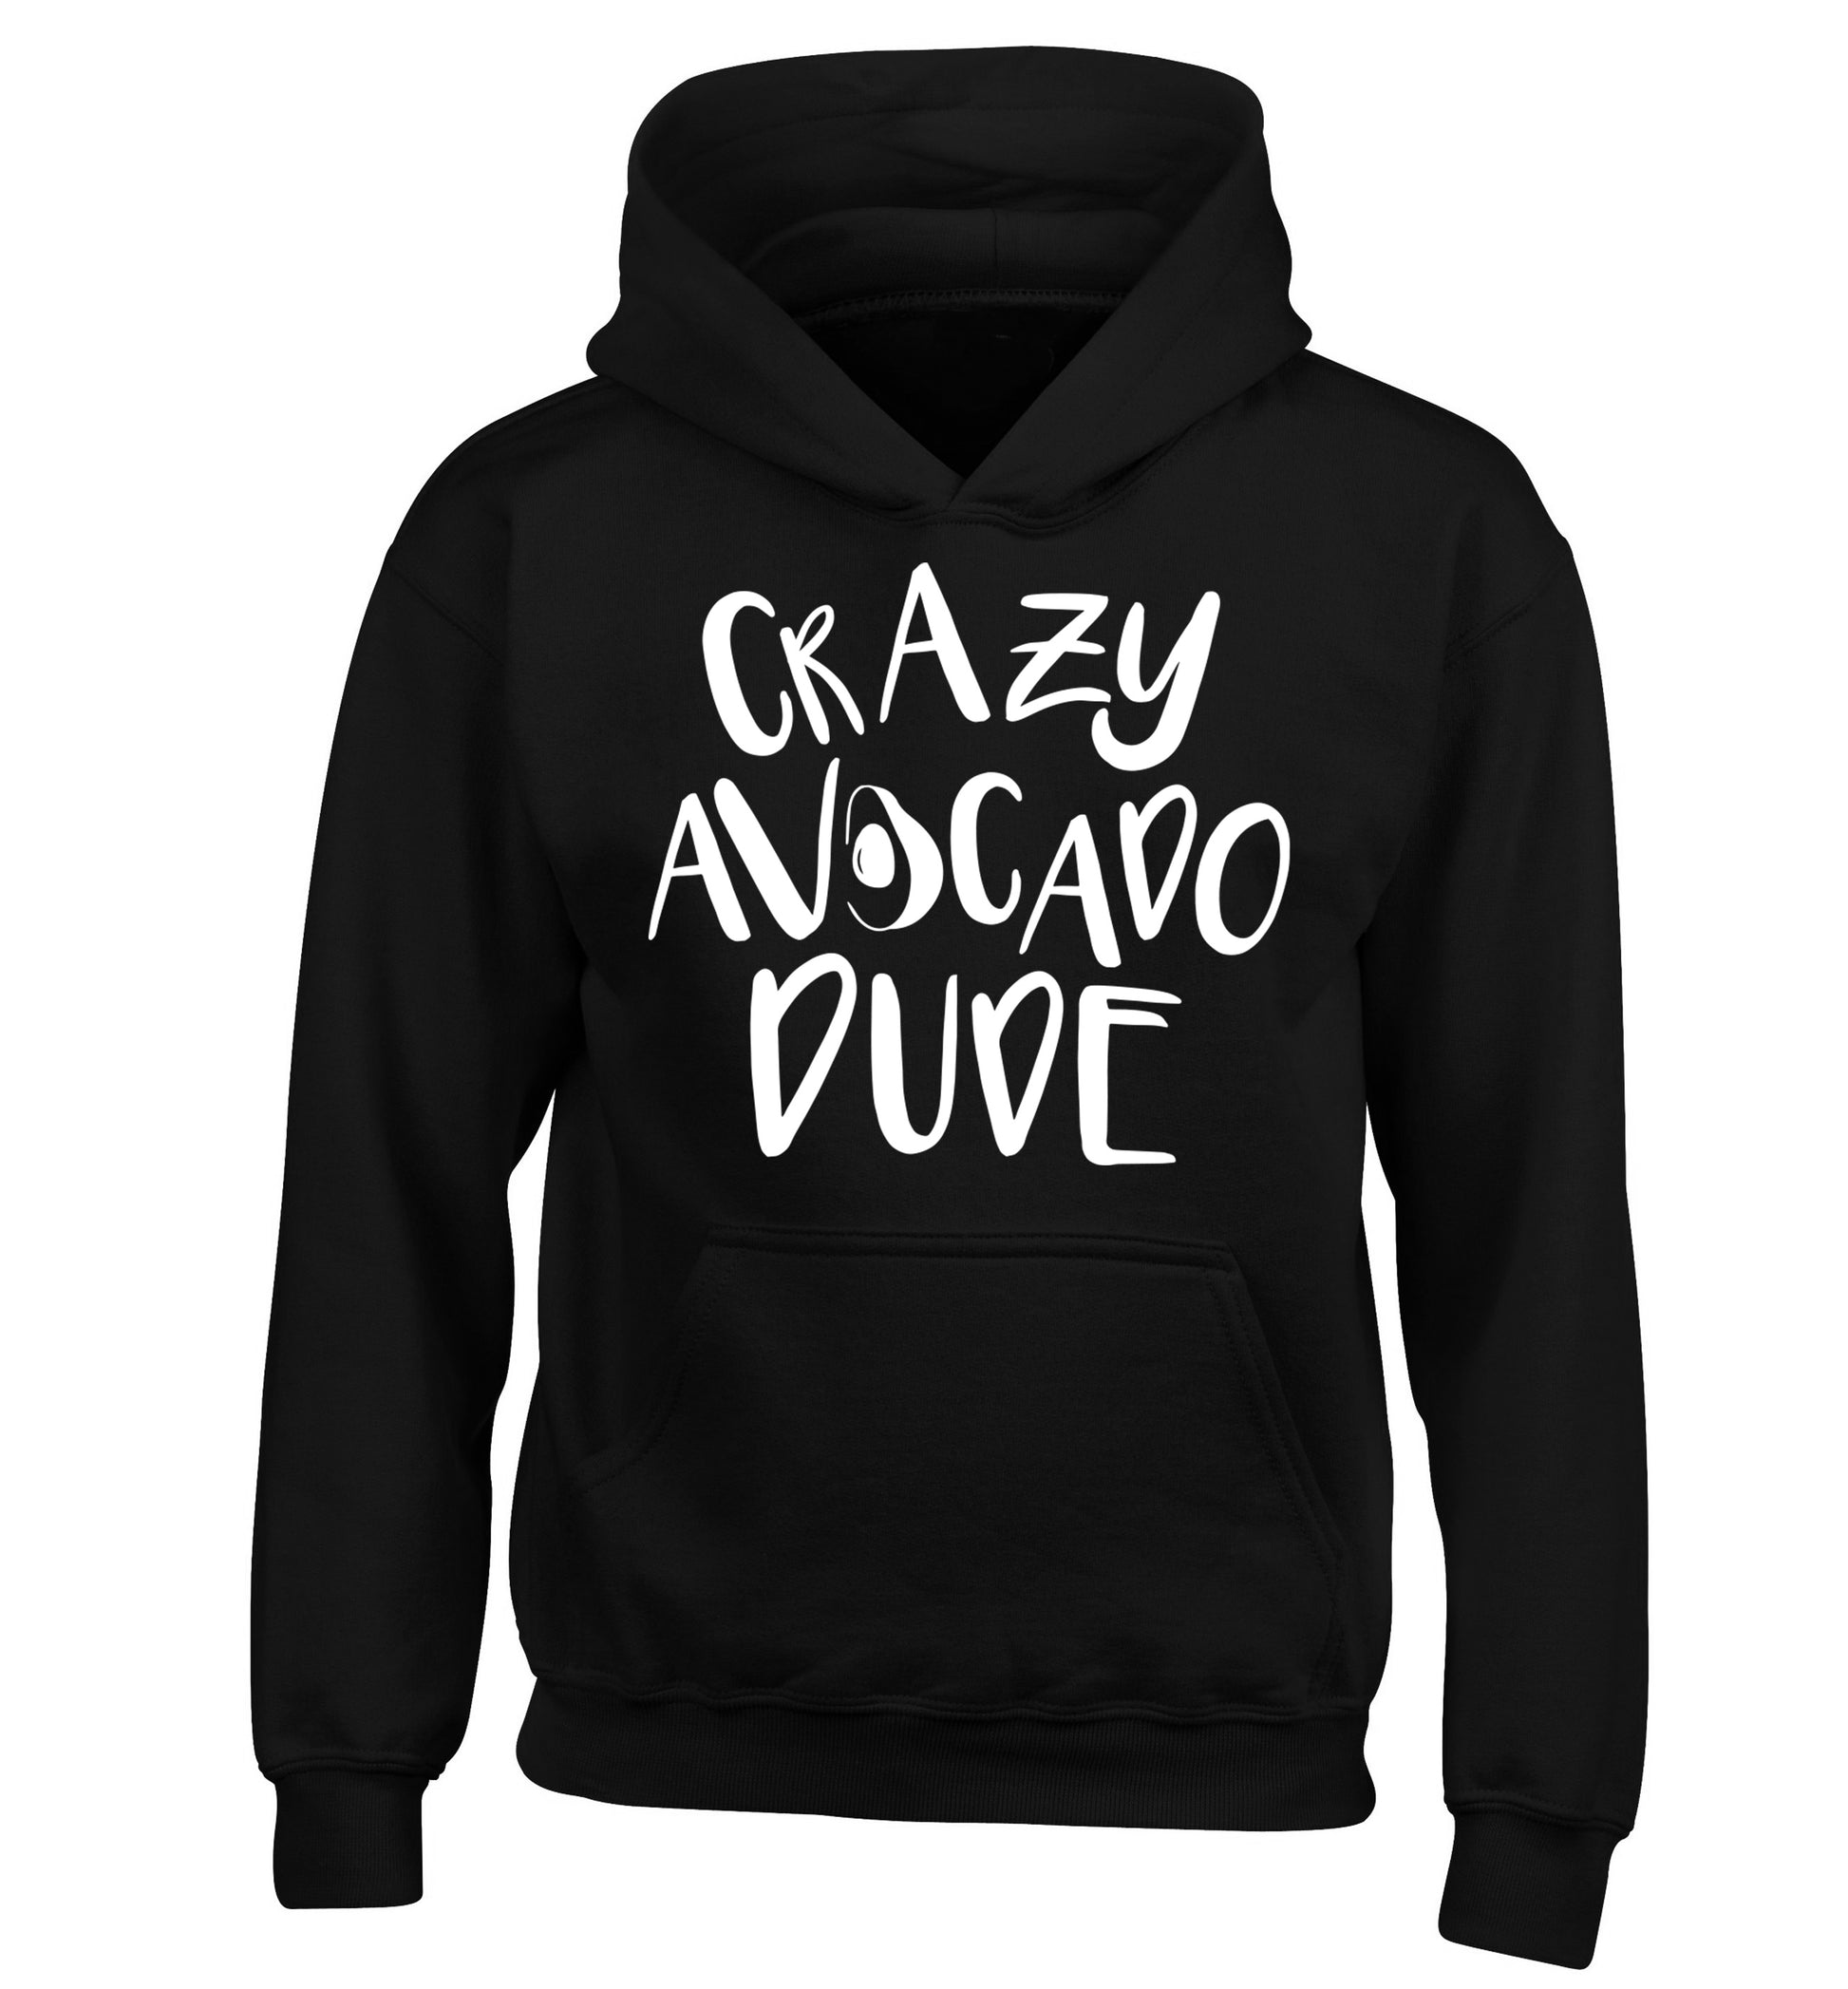 Crazy avocado dude children's black hoodie 12-14 Years